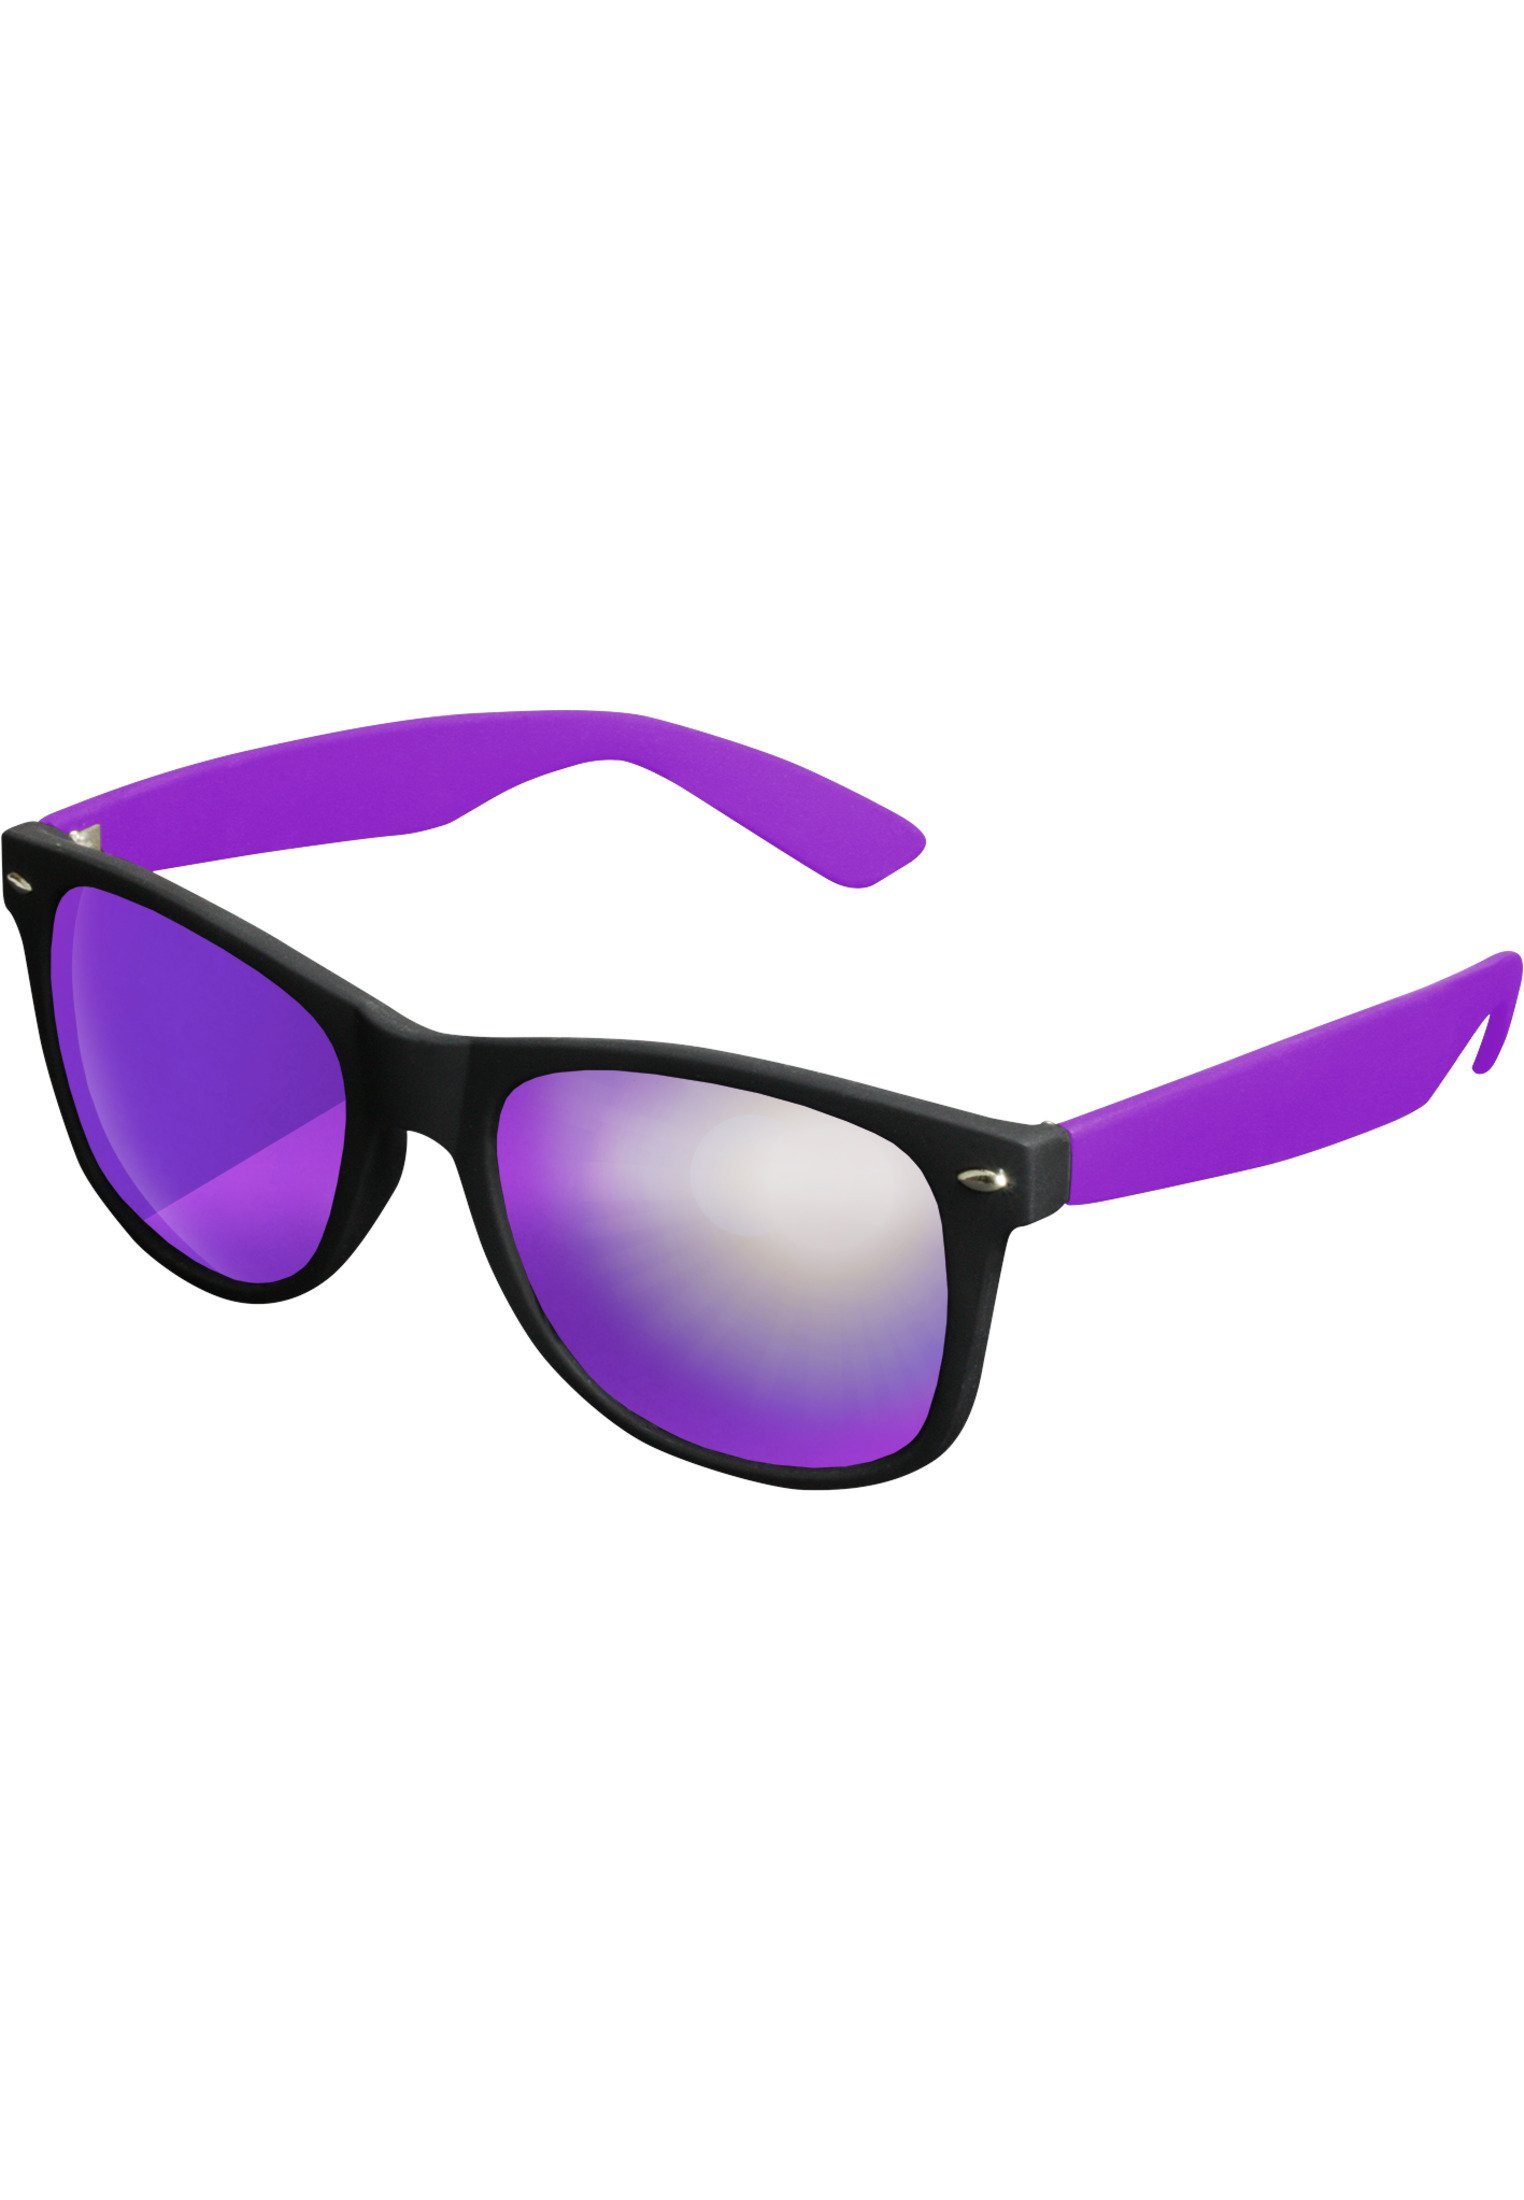 Sonnenbrille Mirror Likoma Accessoires Sunglasses blk/pur/pur MSTRDS